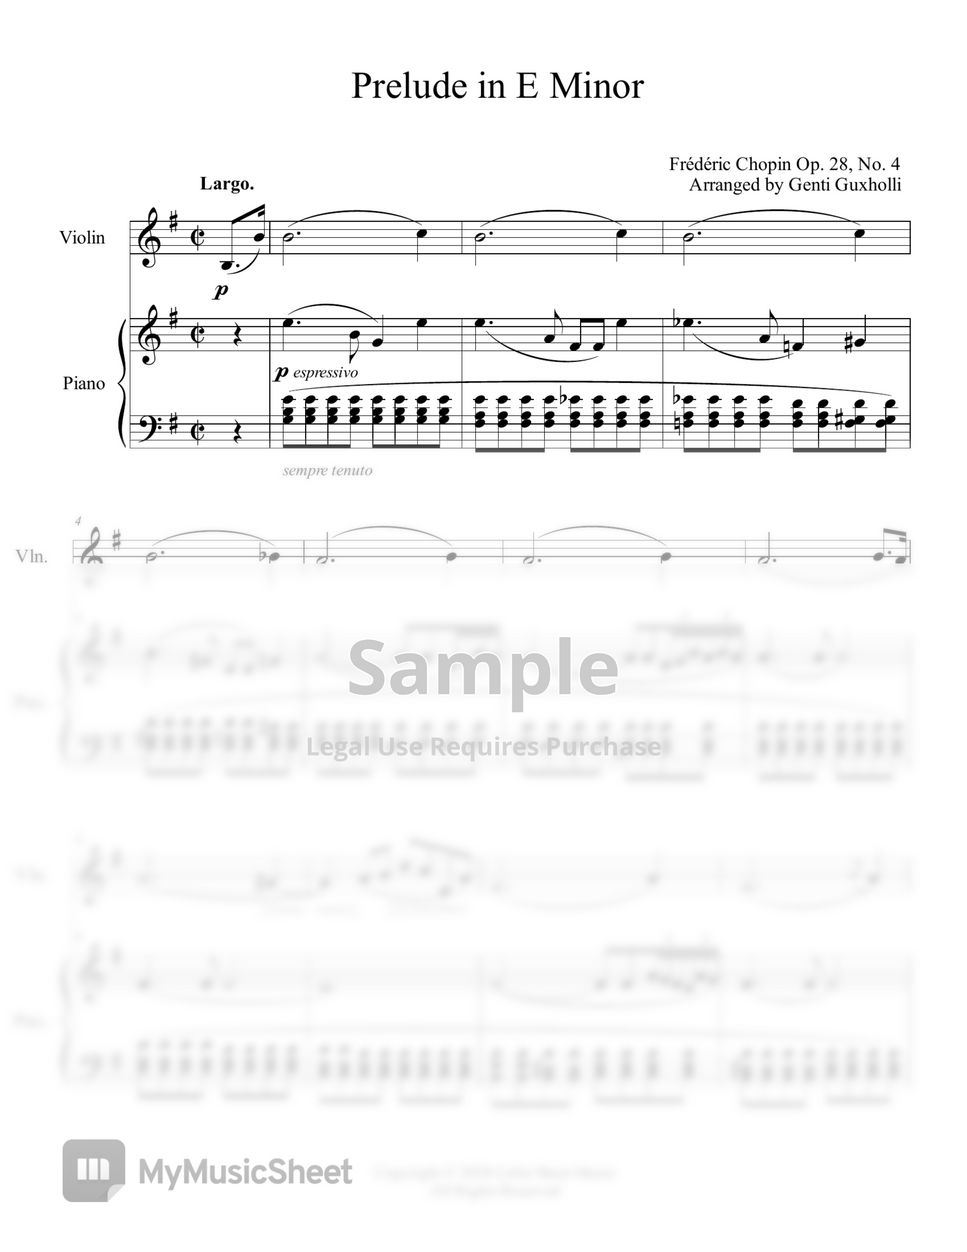 Frédéric Chopin - Prelude in E Minor, Op. 28, No. 4 (Violin Solo with Piano Accompaniment) by Genti Guxholli